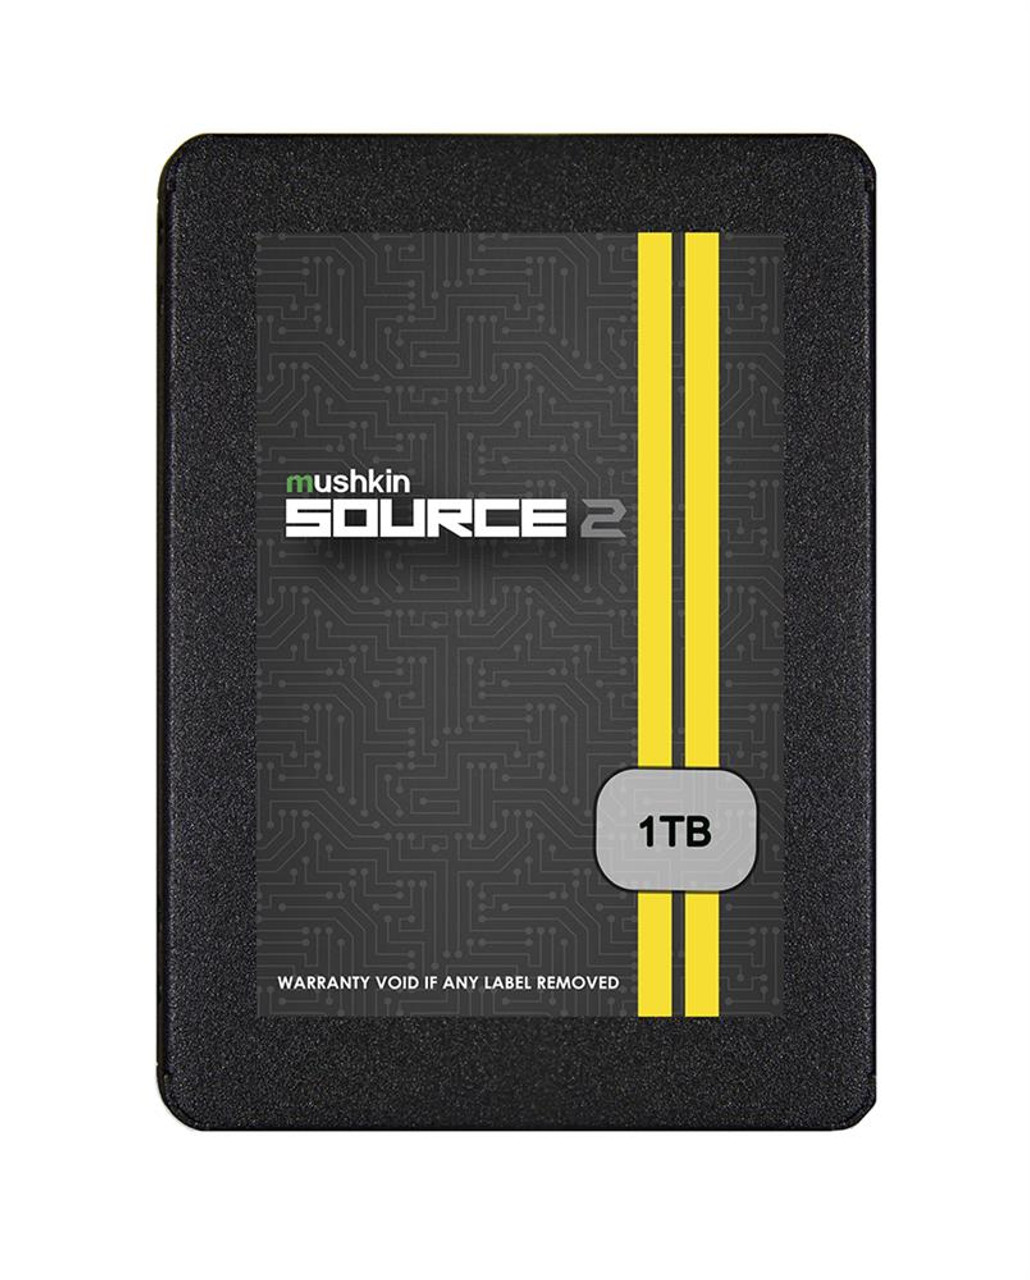 Mushkin SOURCE 2 1TB SATA 6Gbps 2.5-inch Internal Solid State Drive (SSD)